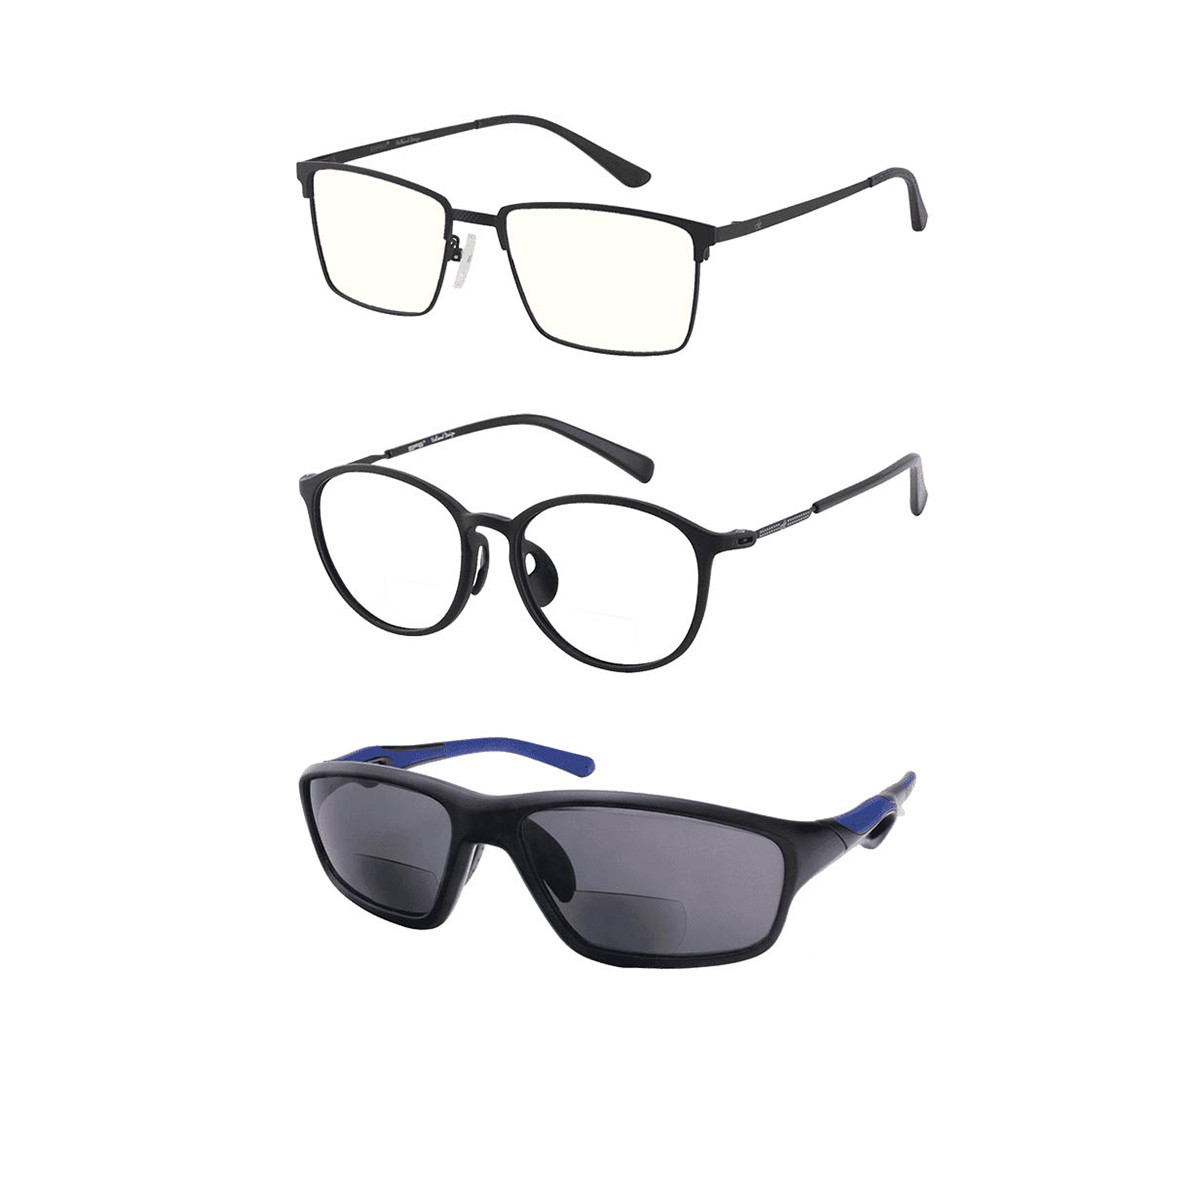 3-Pack Bifocals Blue Light and Cycling Set